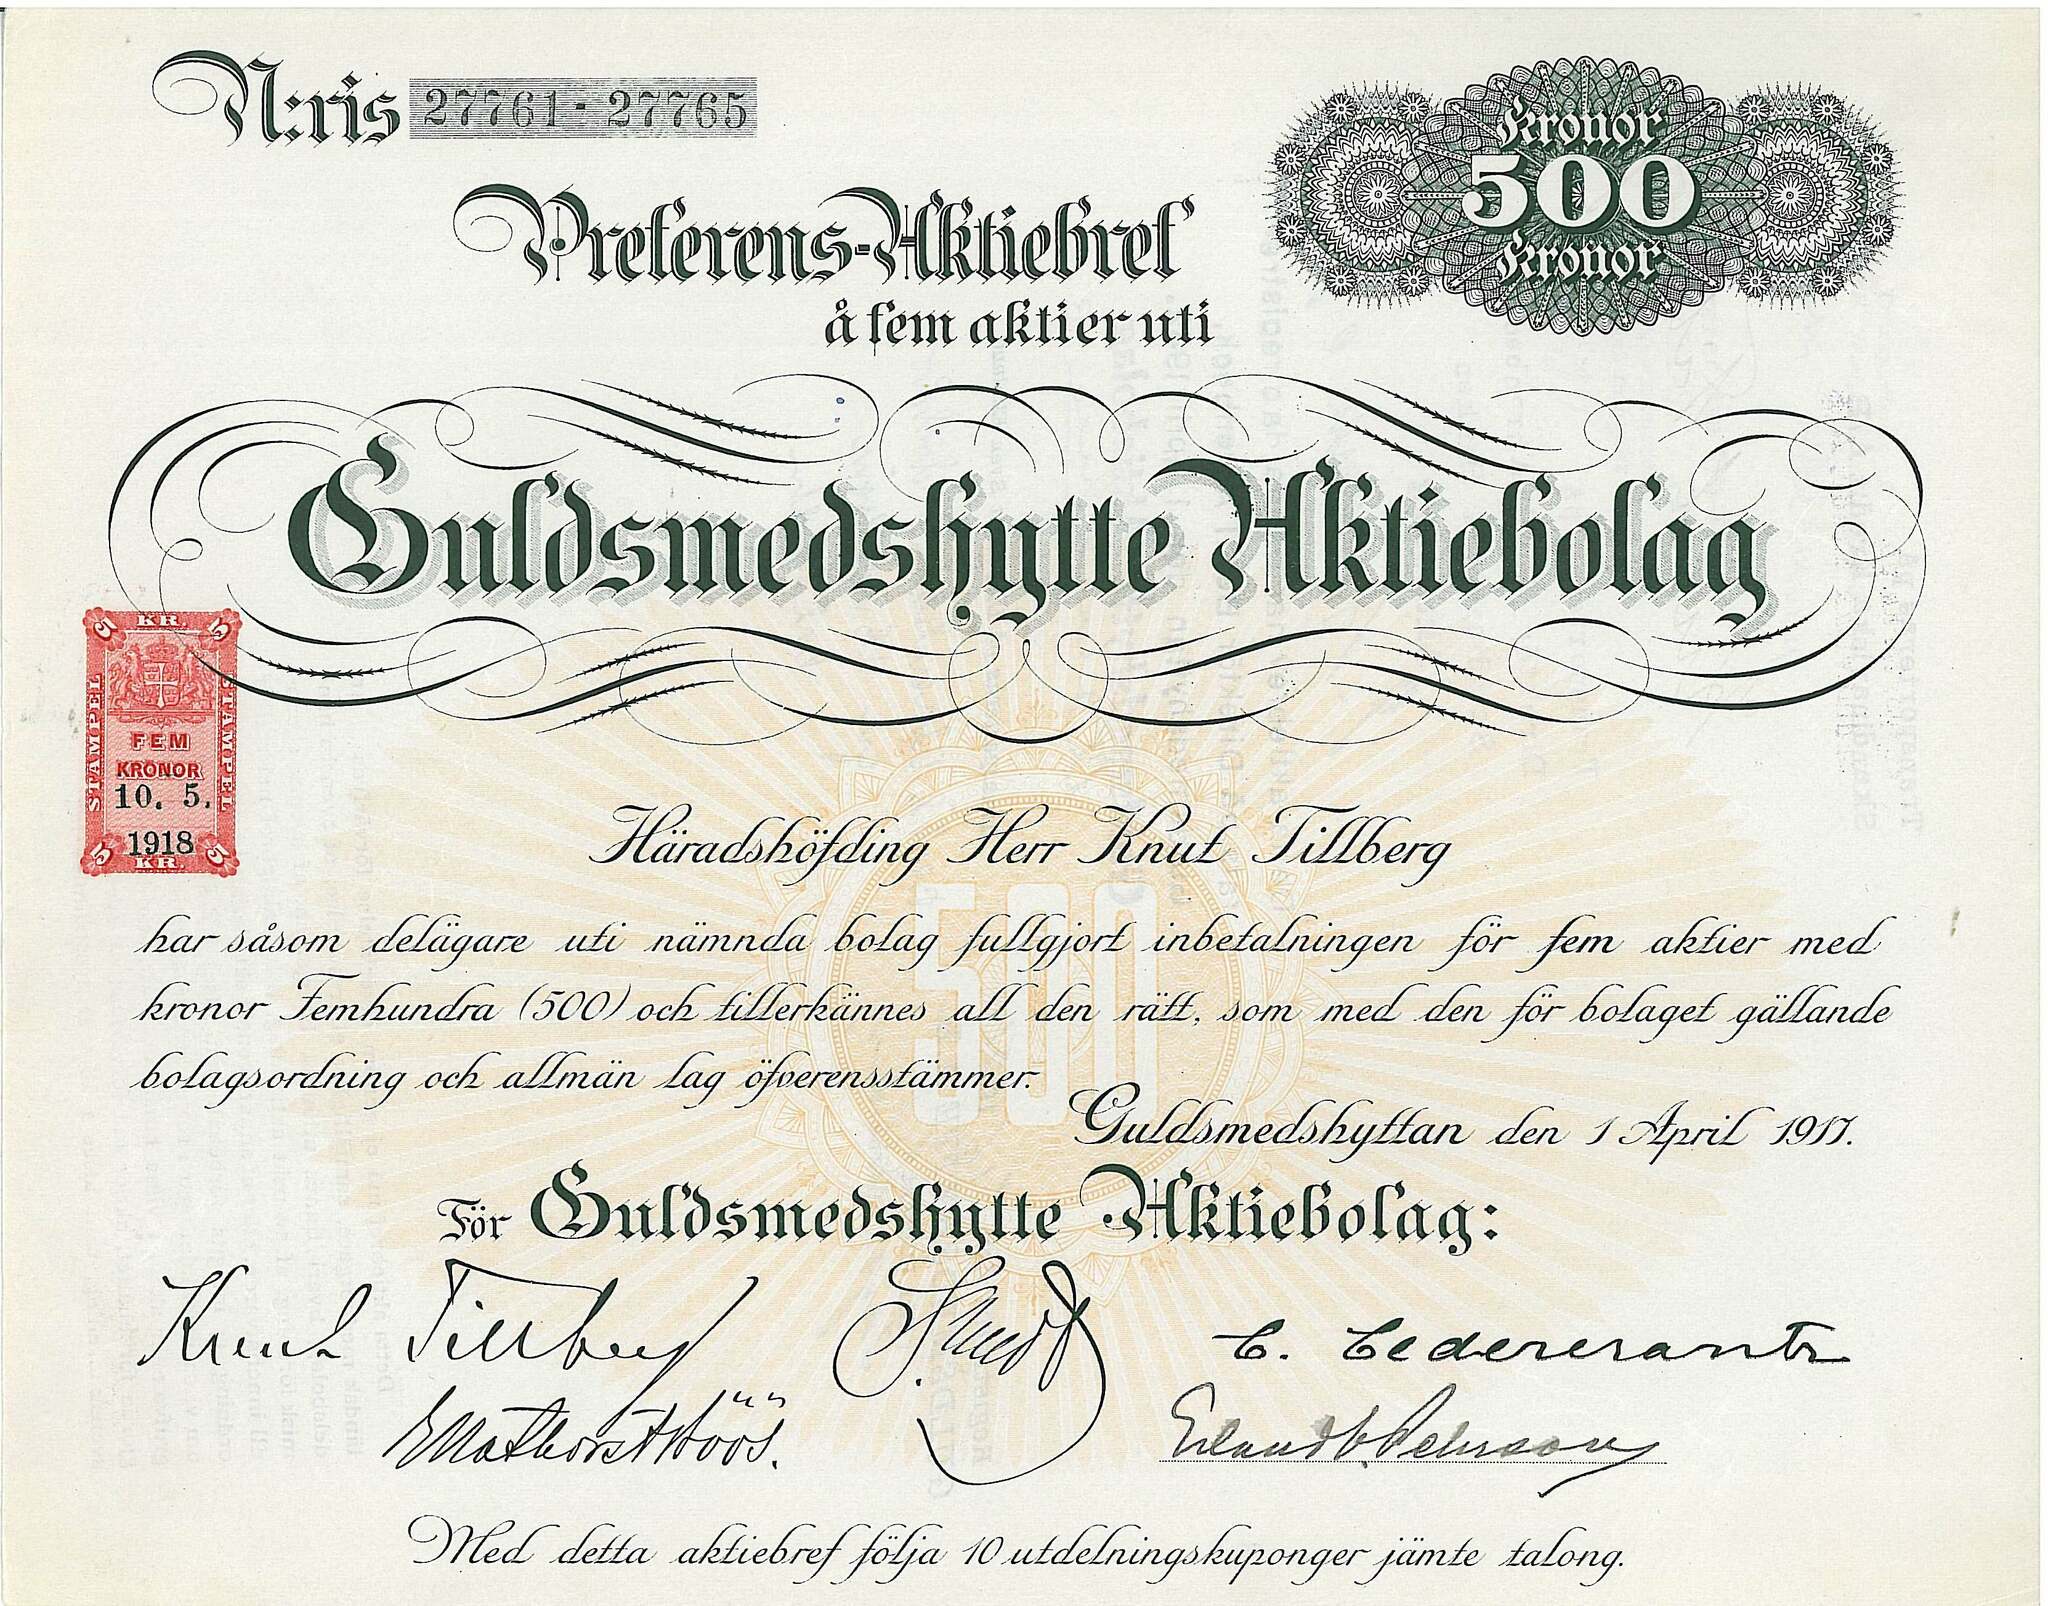 Guldsmedshytte AB, 1917, 500 kr